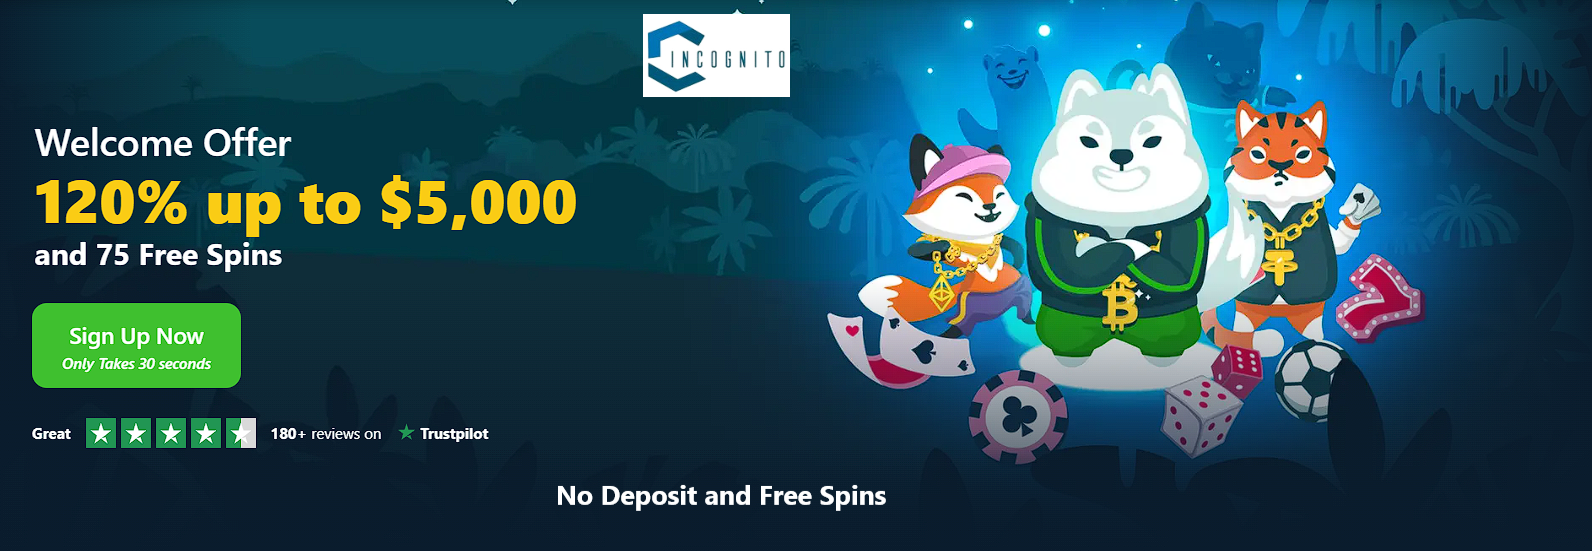 No Deposit Bonus, Wild.io Casino Free Spins